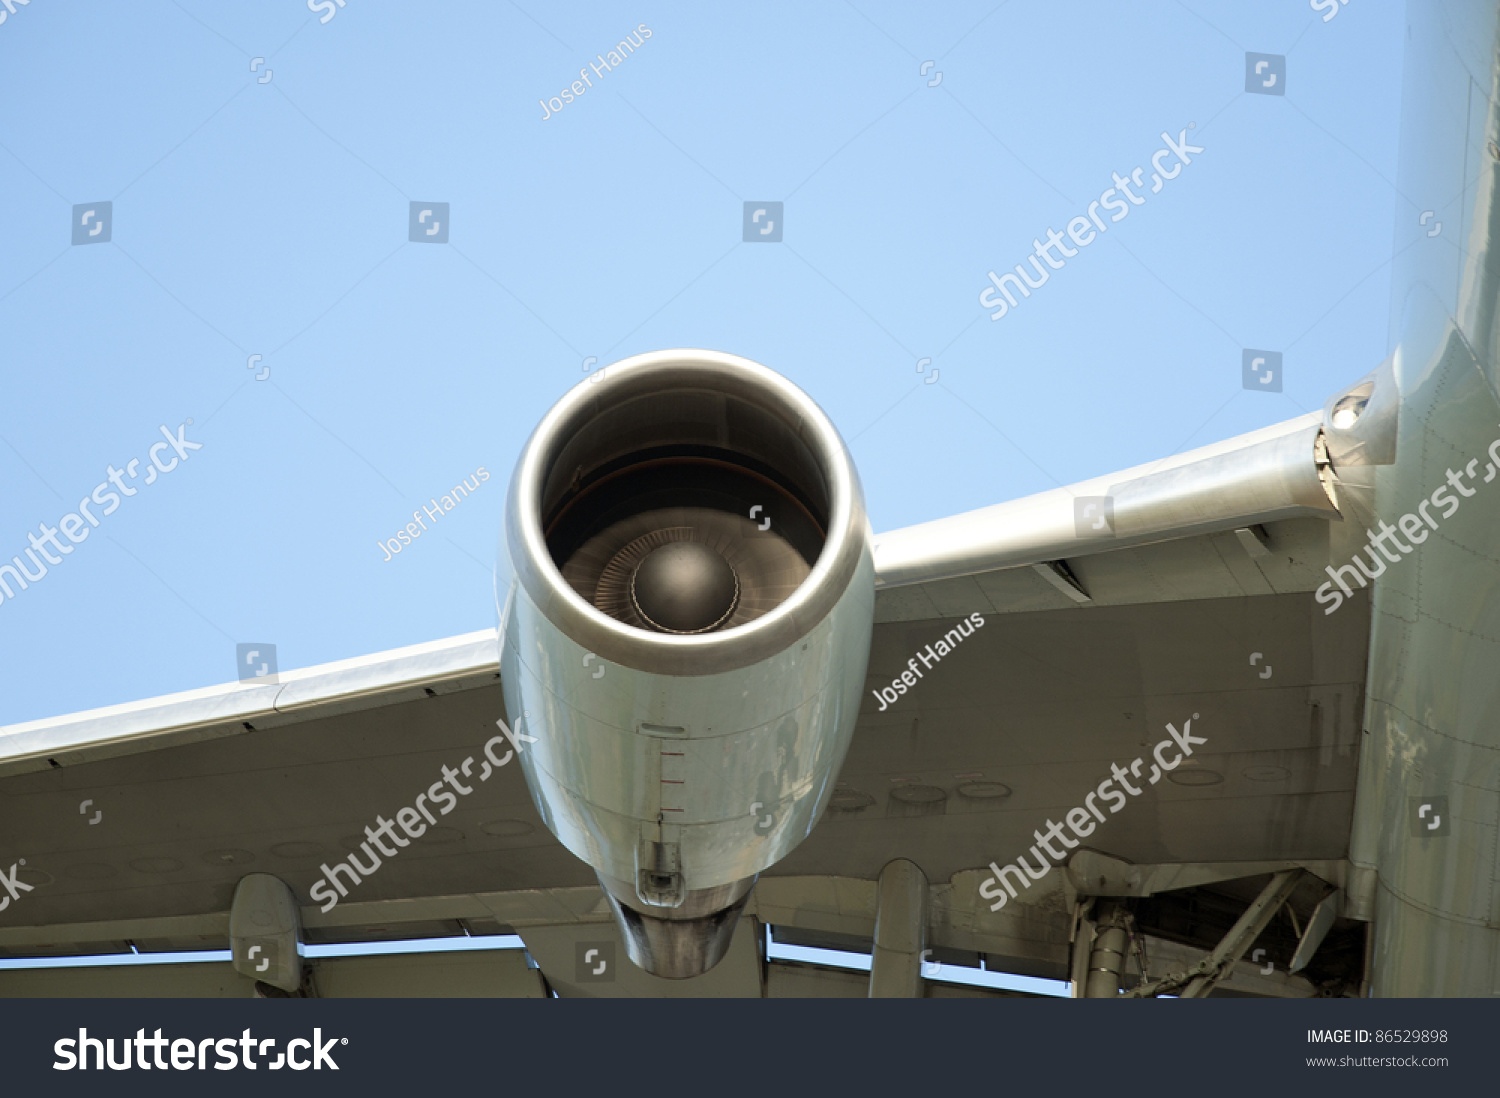 Turbine of airplane #86529898